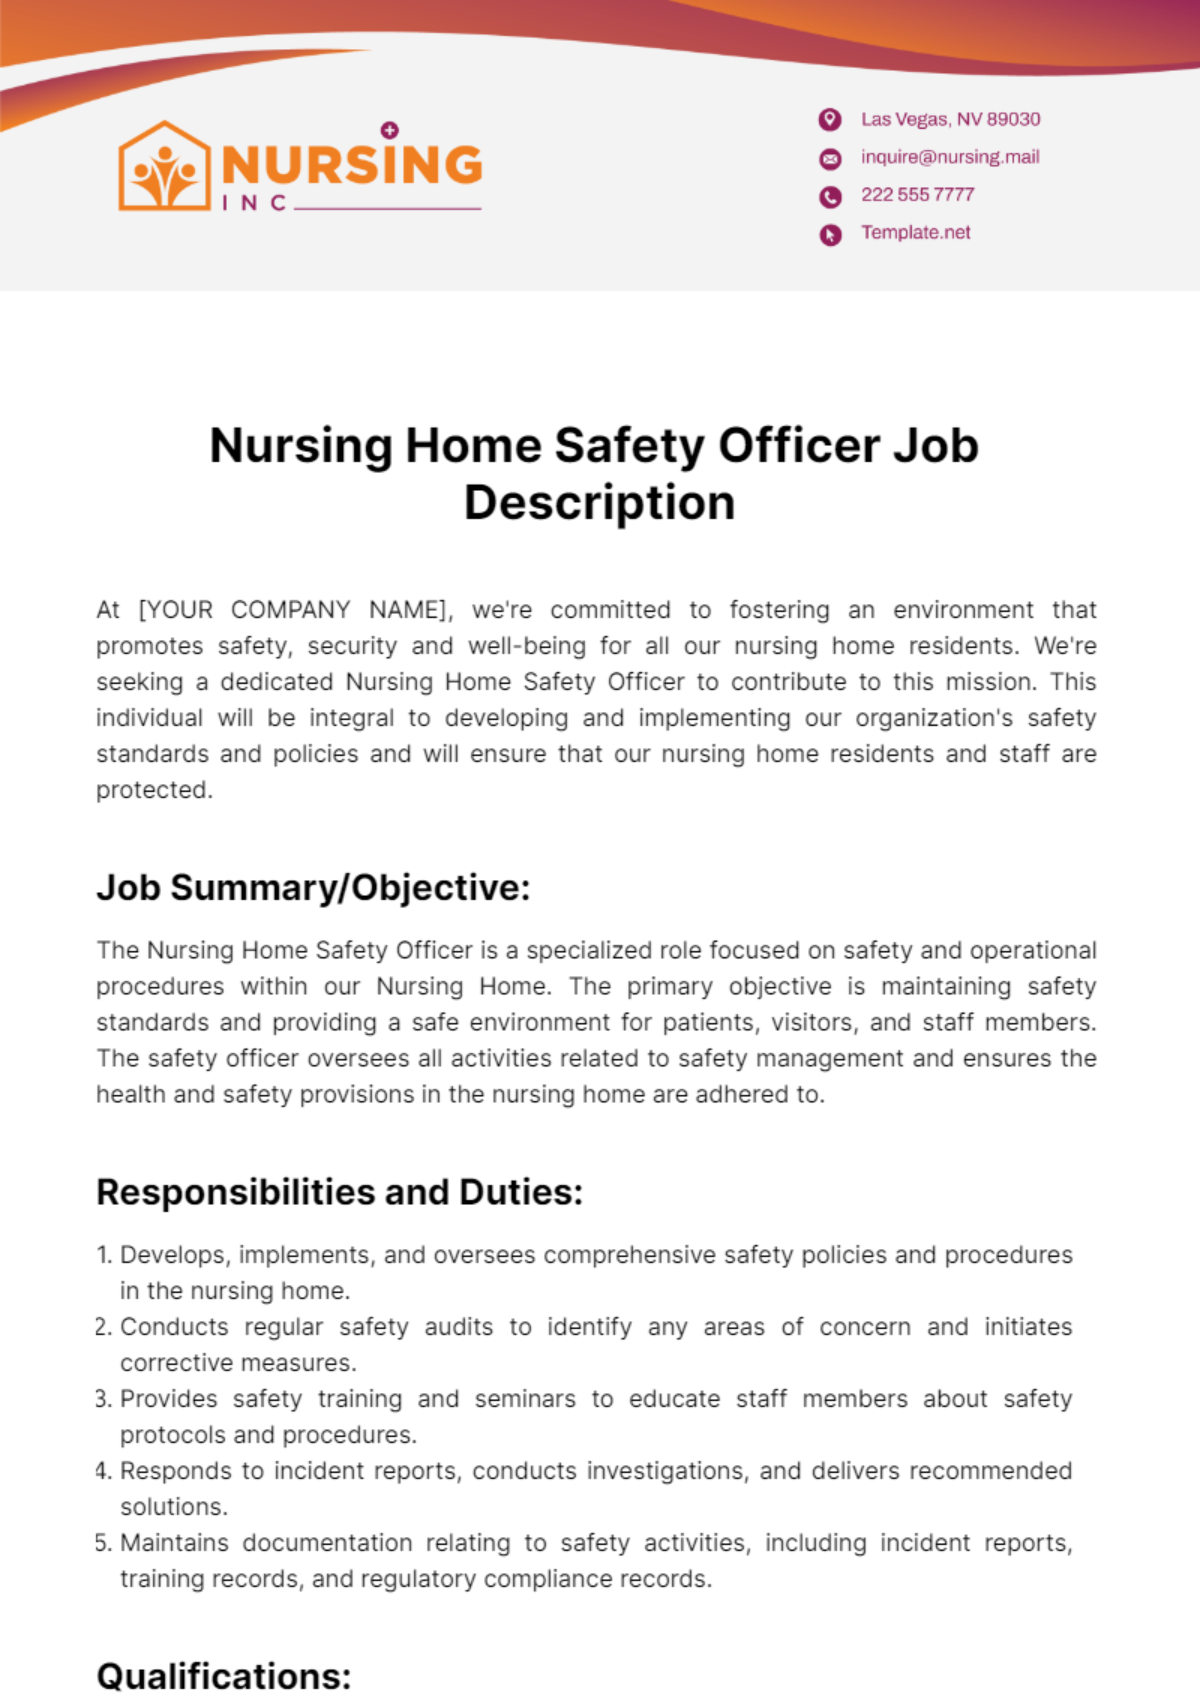 Nursing Home Safety Officer Job Description Template